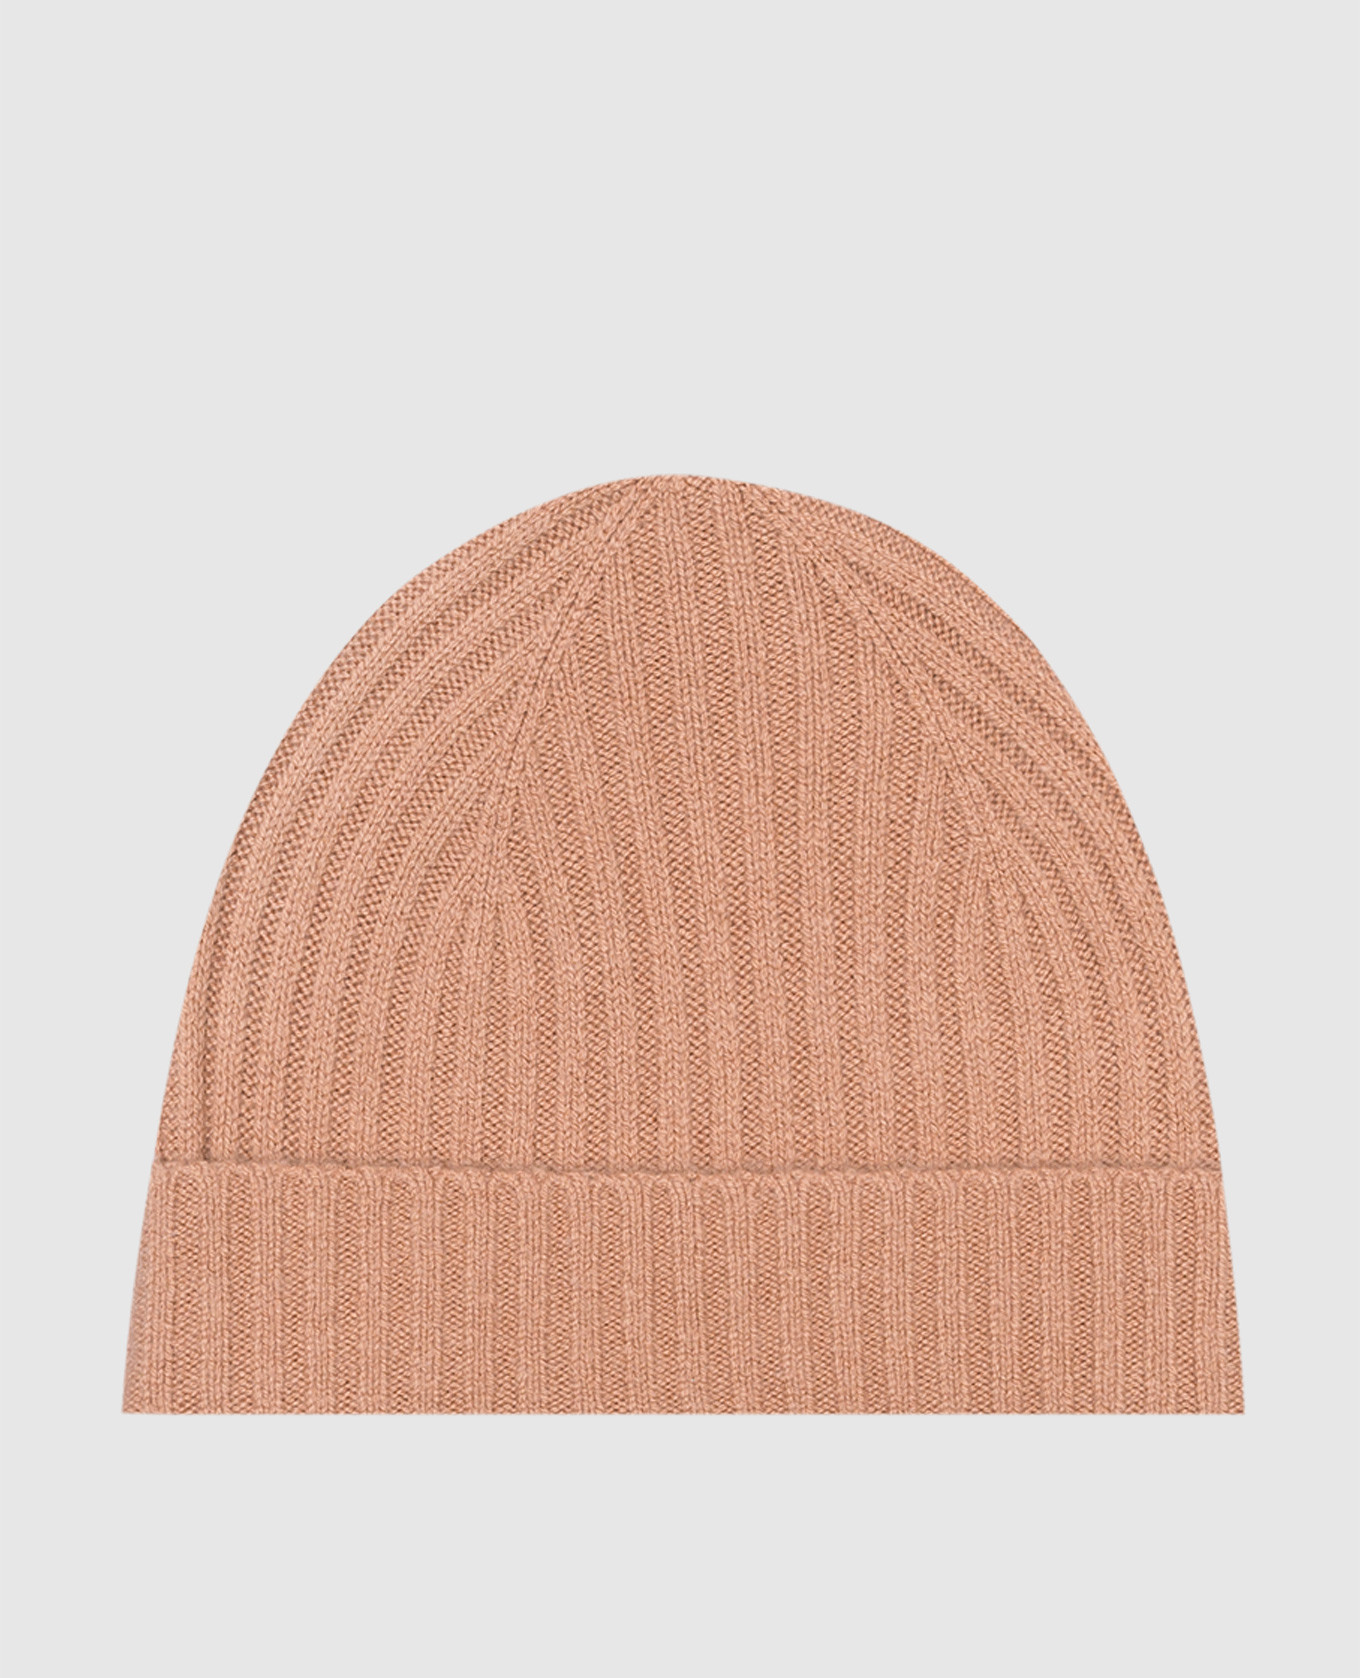 Brown cashmere hat